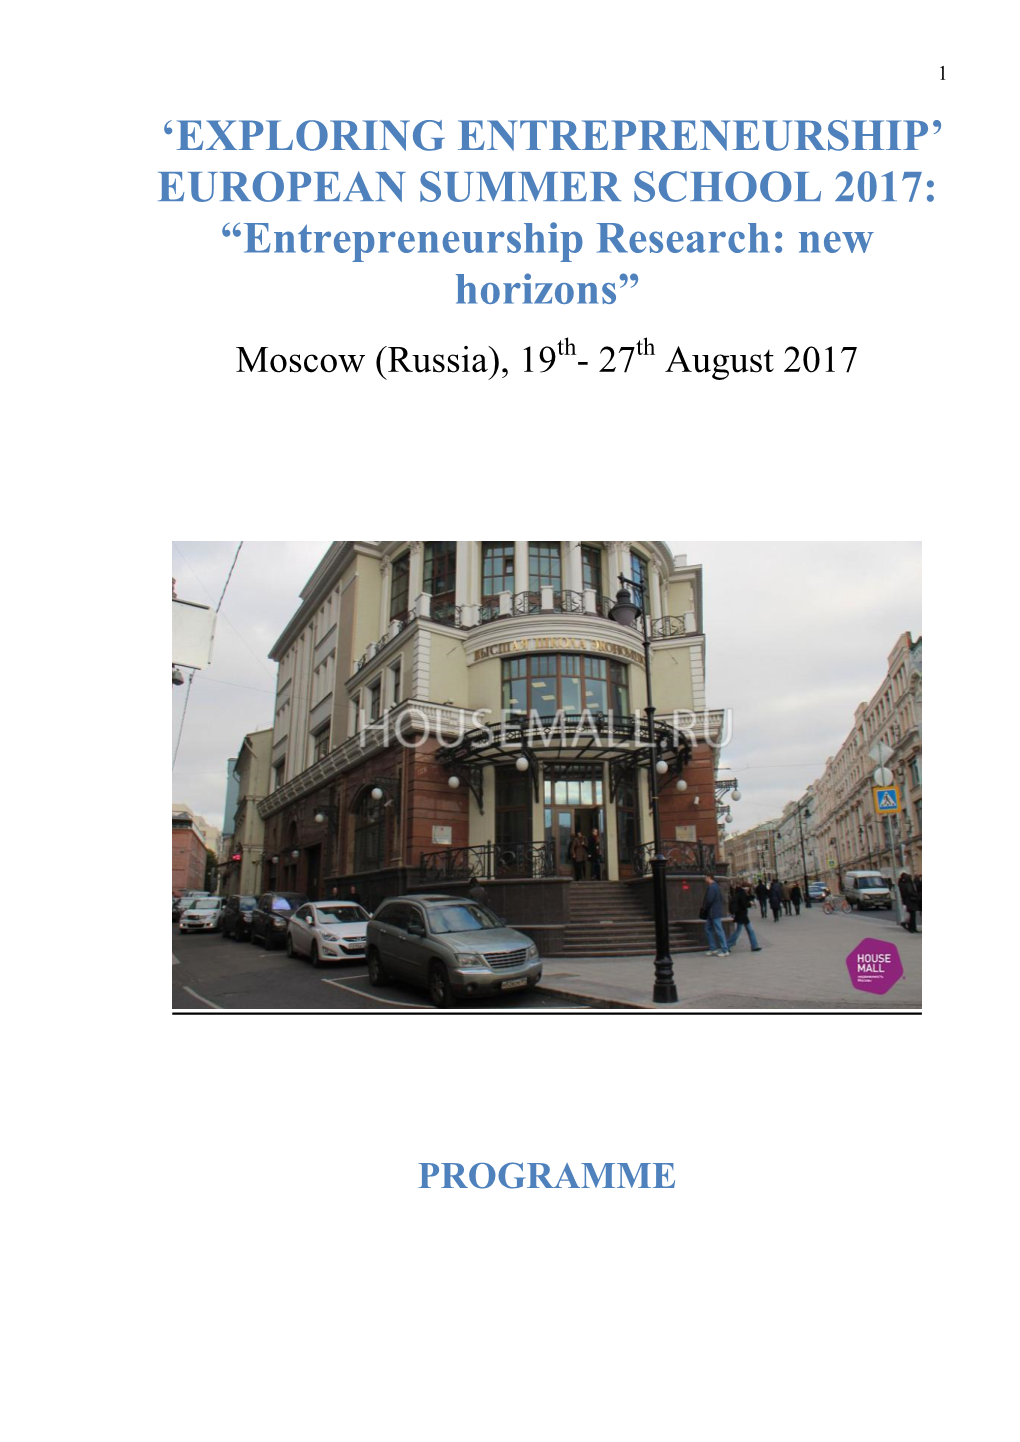 European Entrepreneurship Summer School 2013